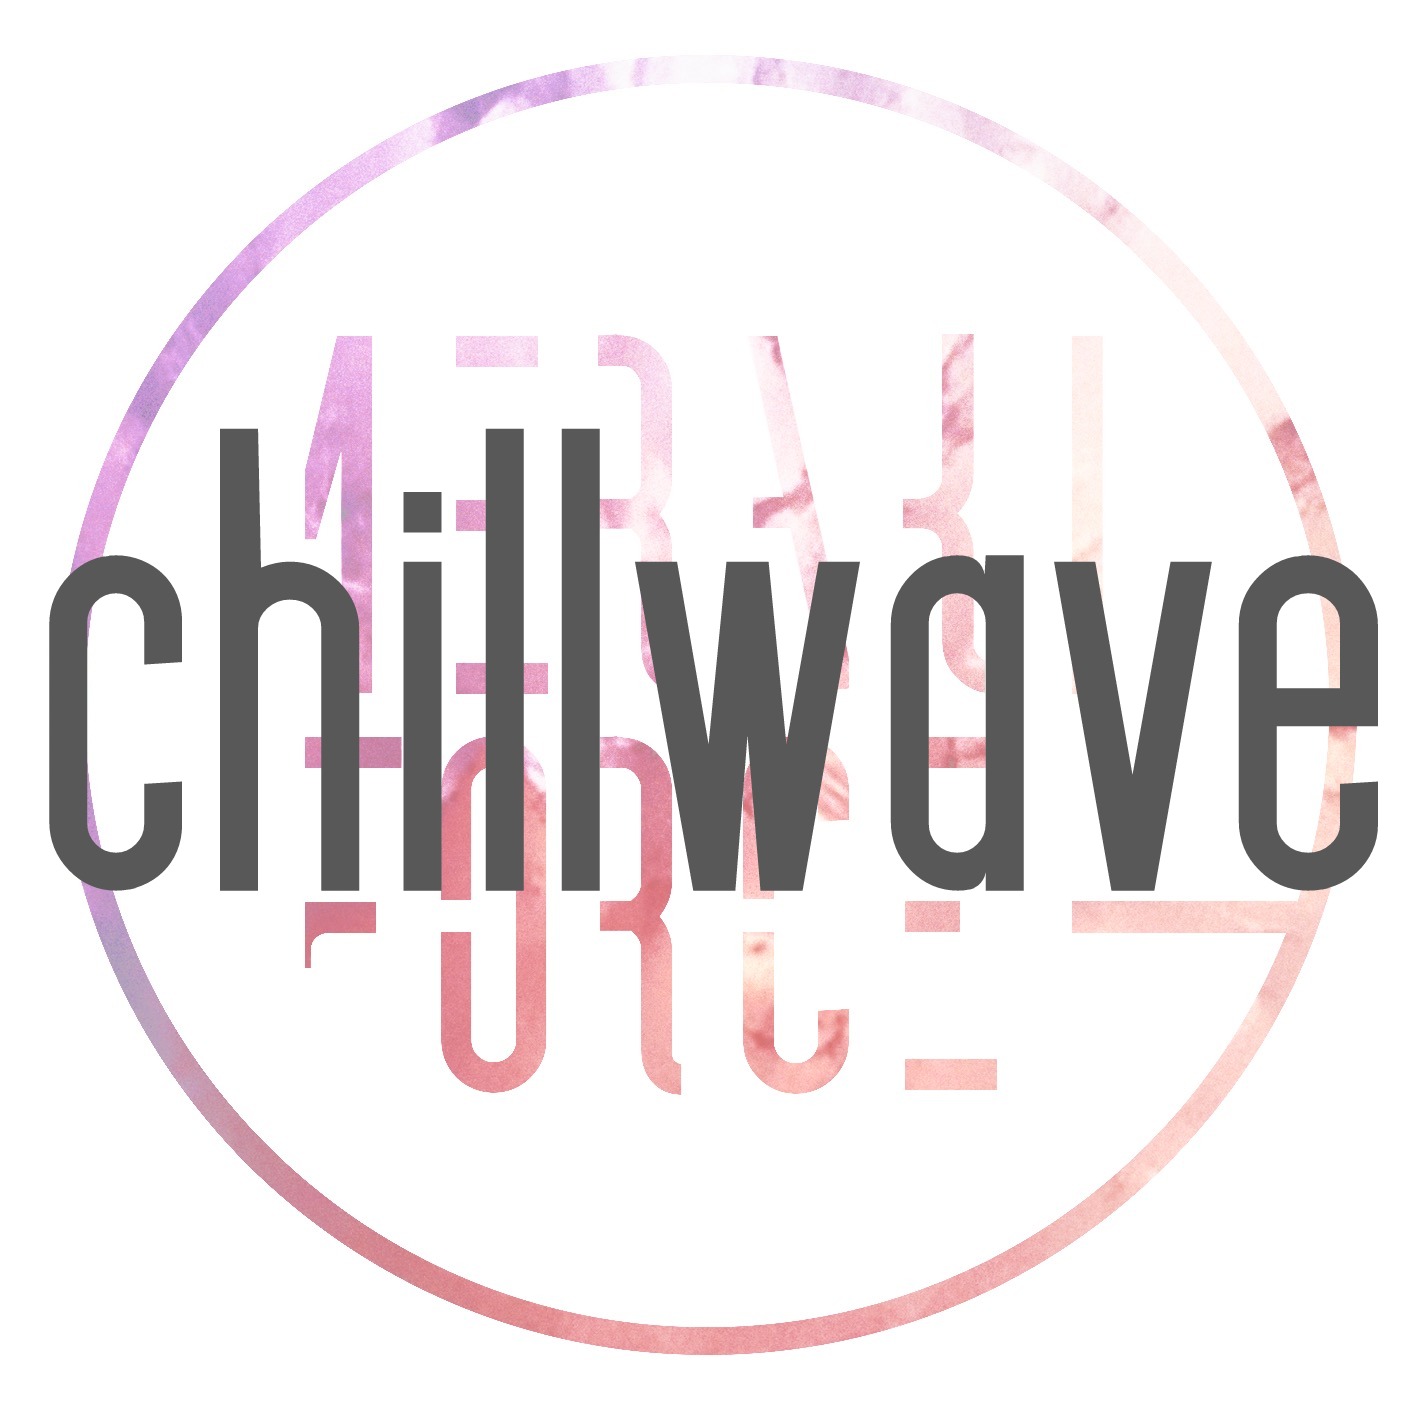 Chillwave - Glo-fi - Psychedelic - Dreampop - Dreamwave ...